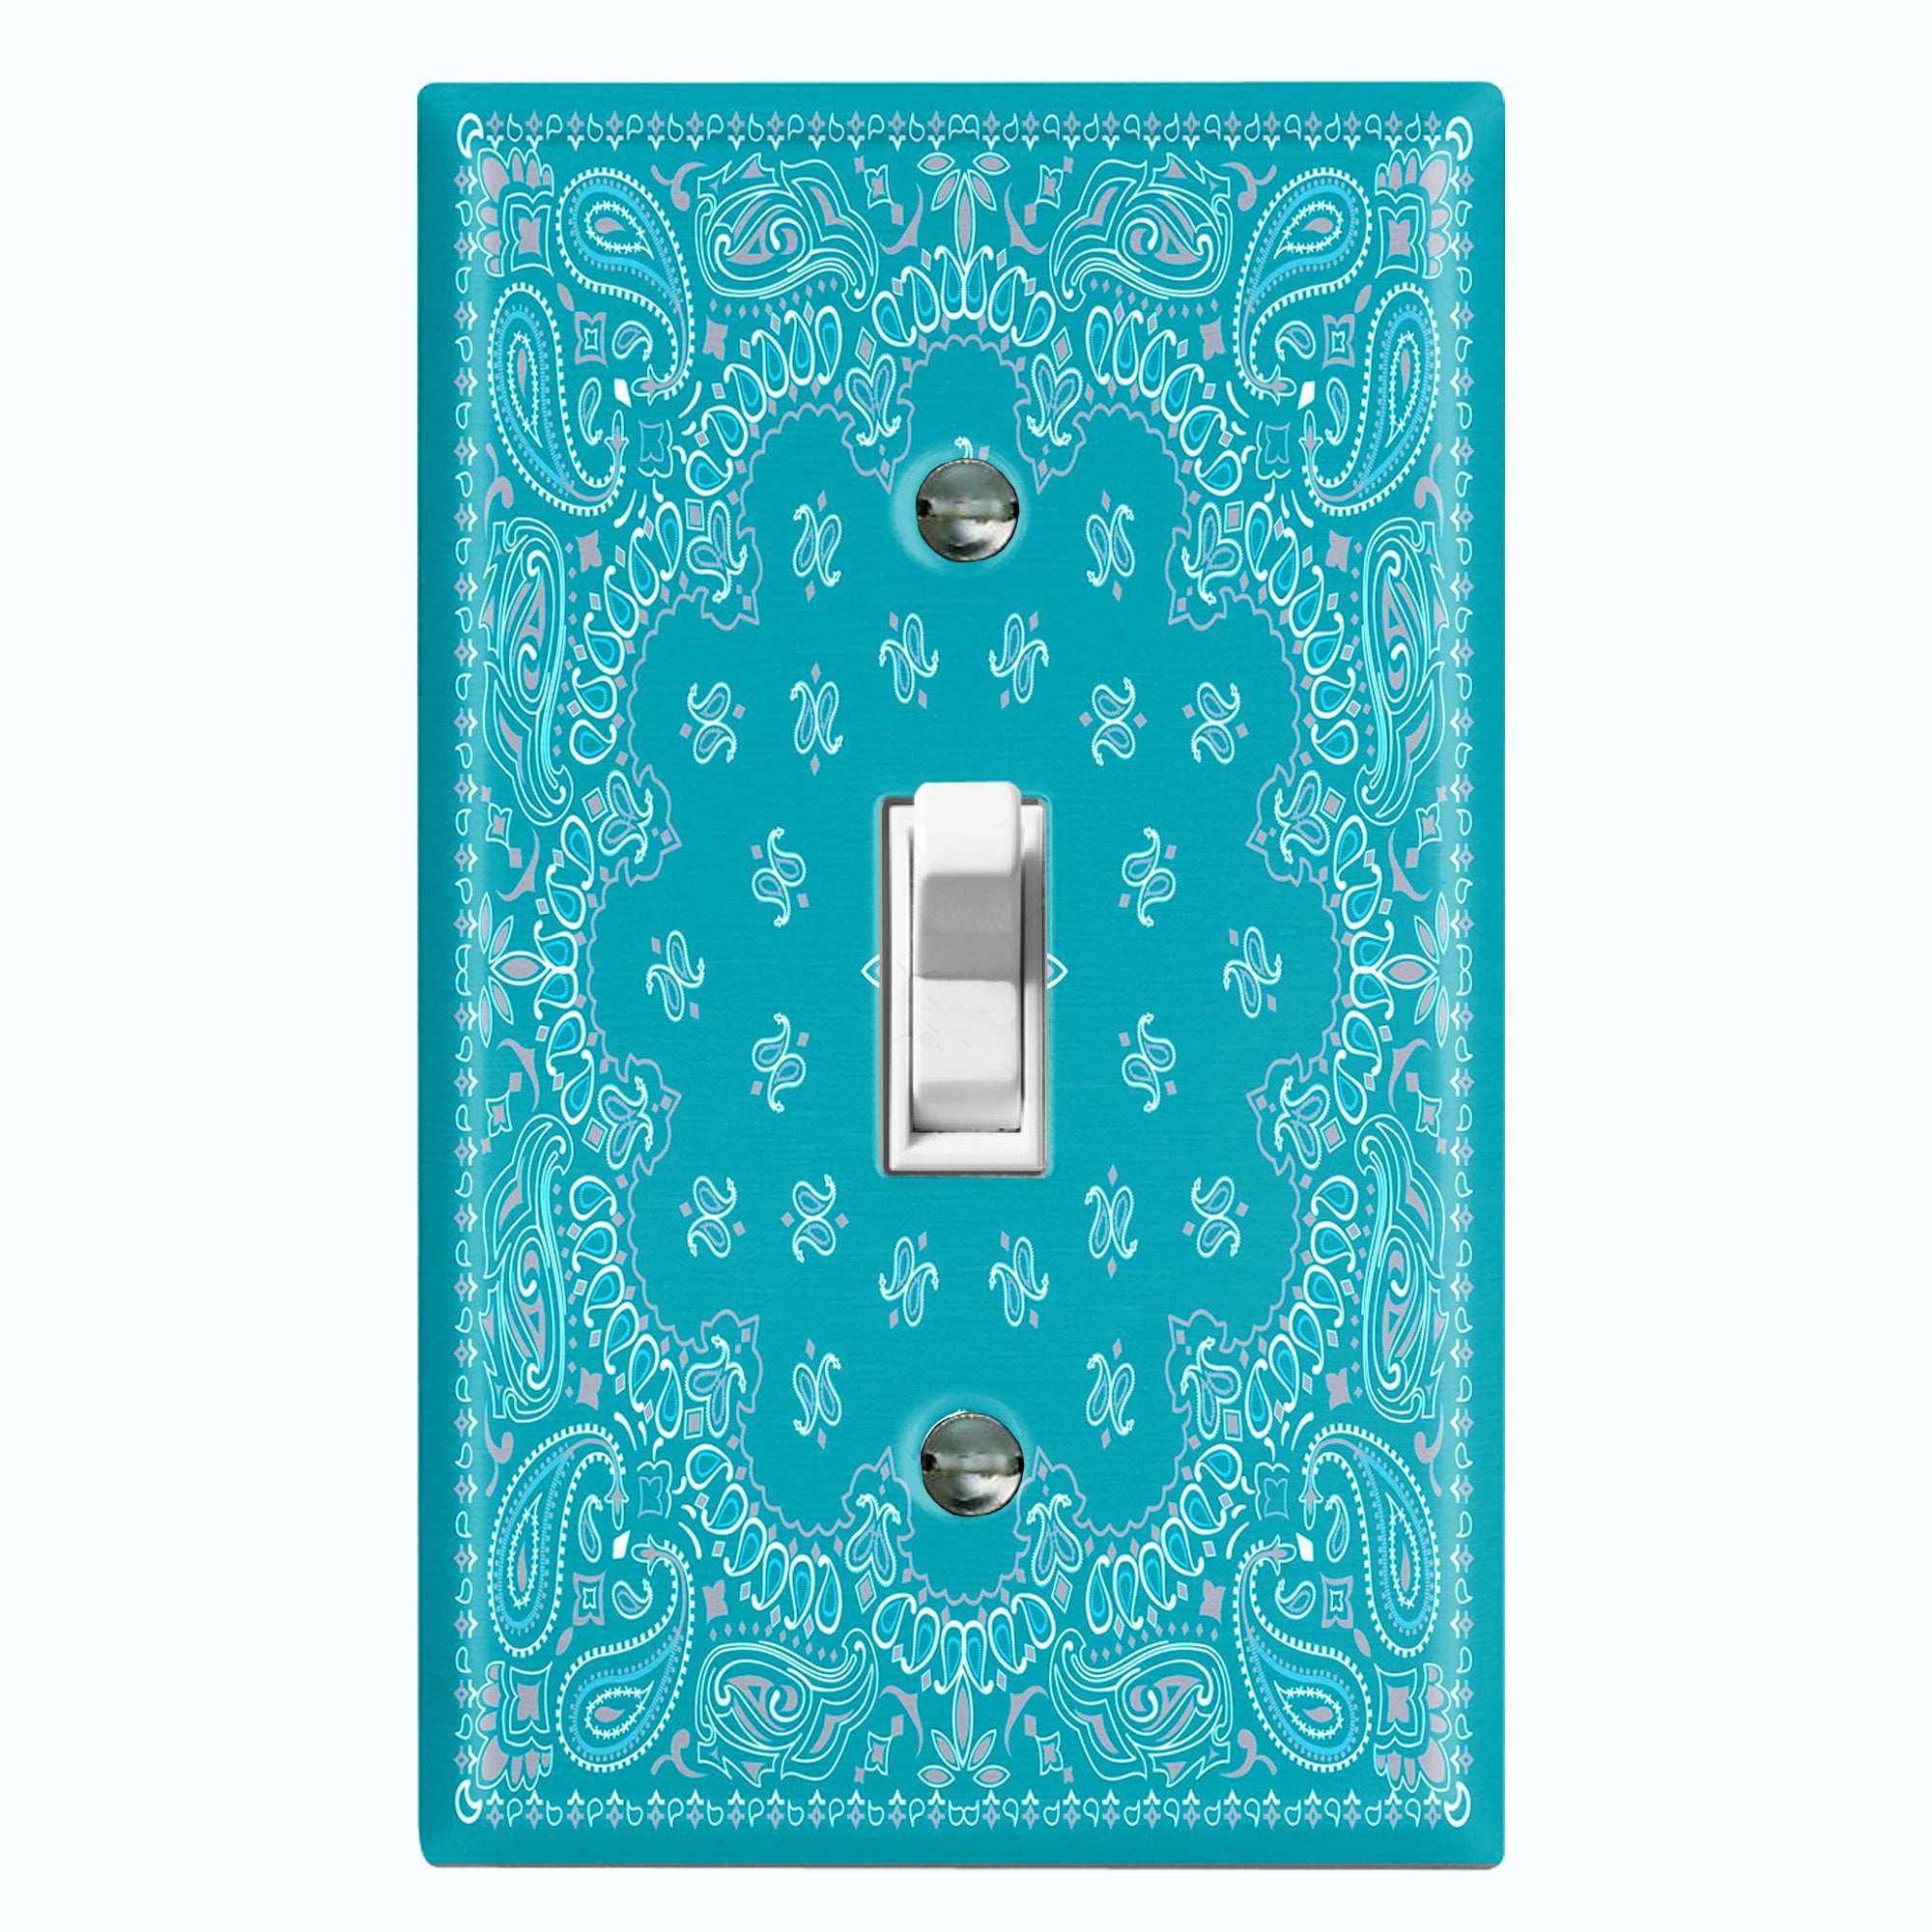 Faux Finish Fleur De Lis French Home Decor Teal Metal Light Switch Plate Cover 